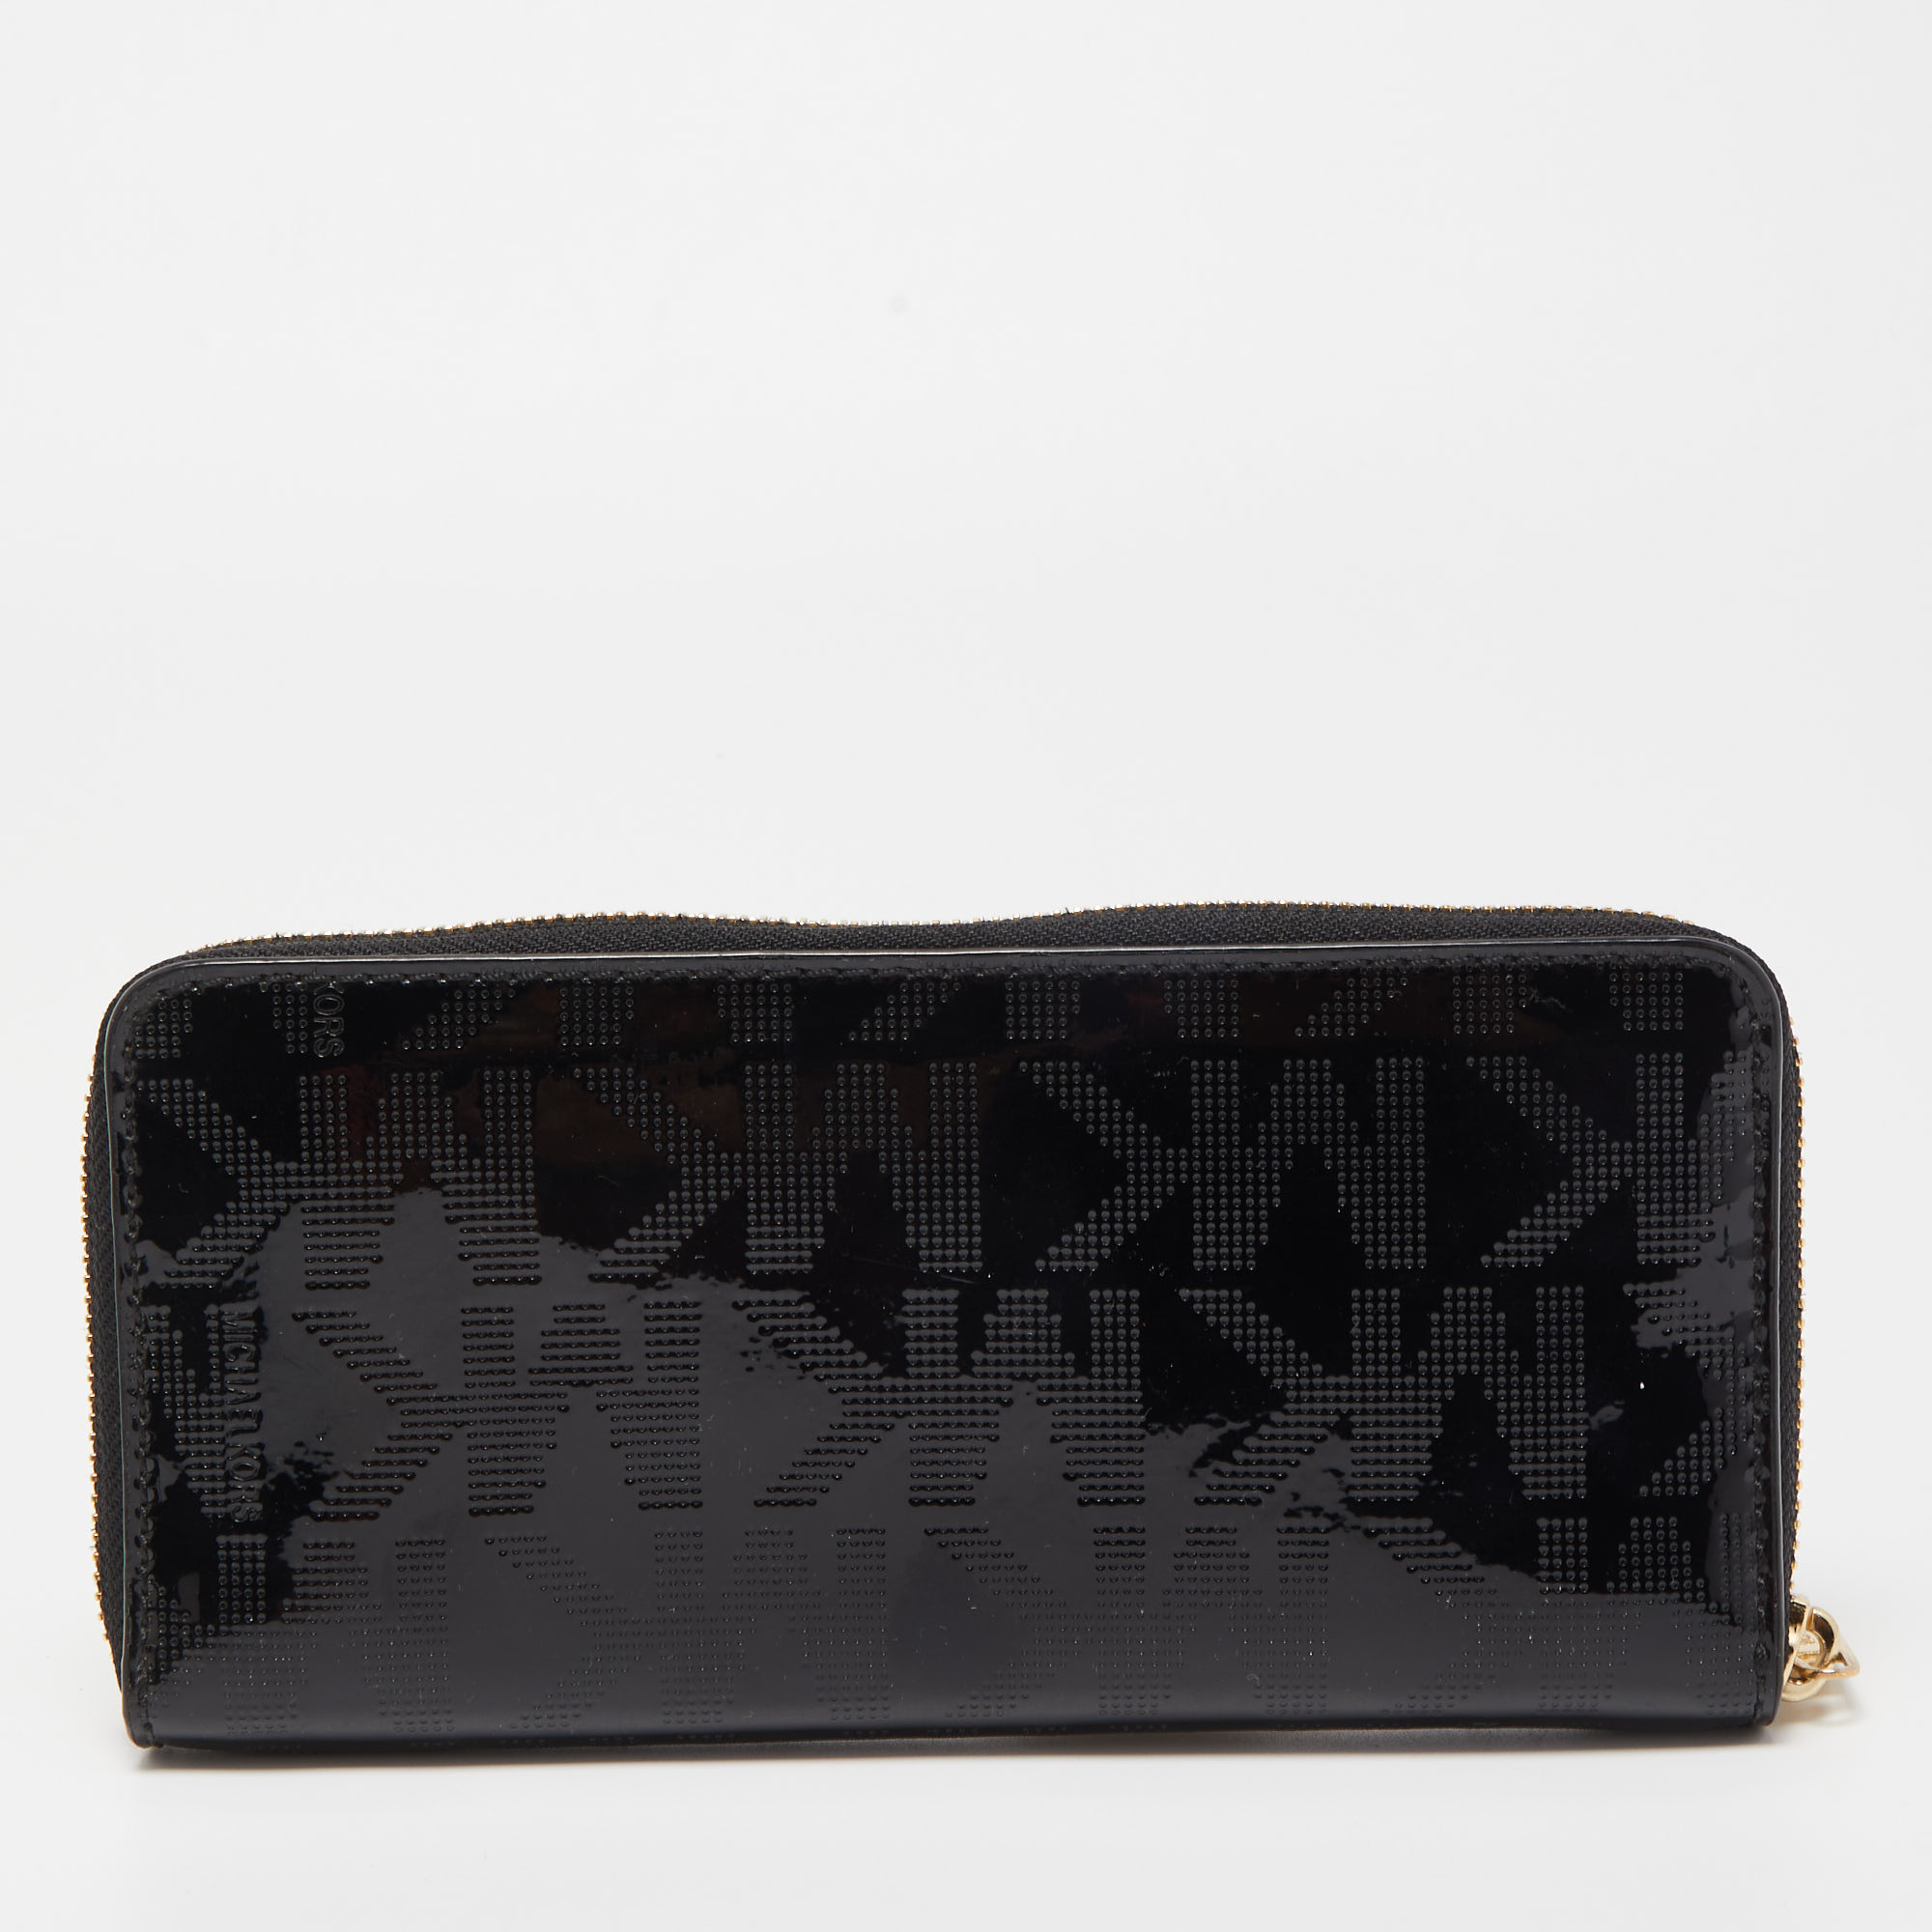 Michael Kors Black Patent Leather Zip Around Wallet